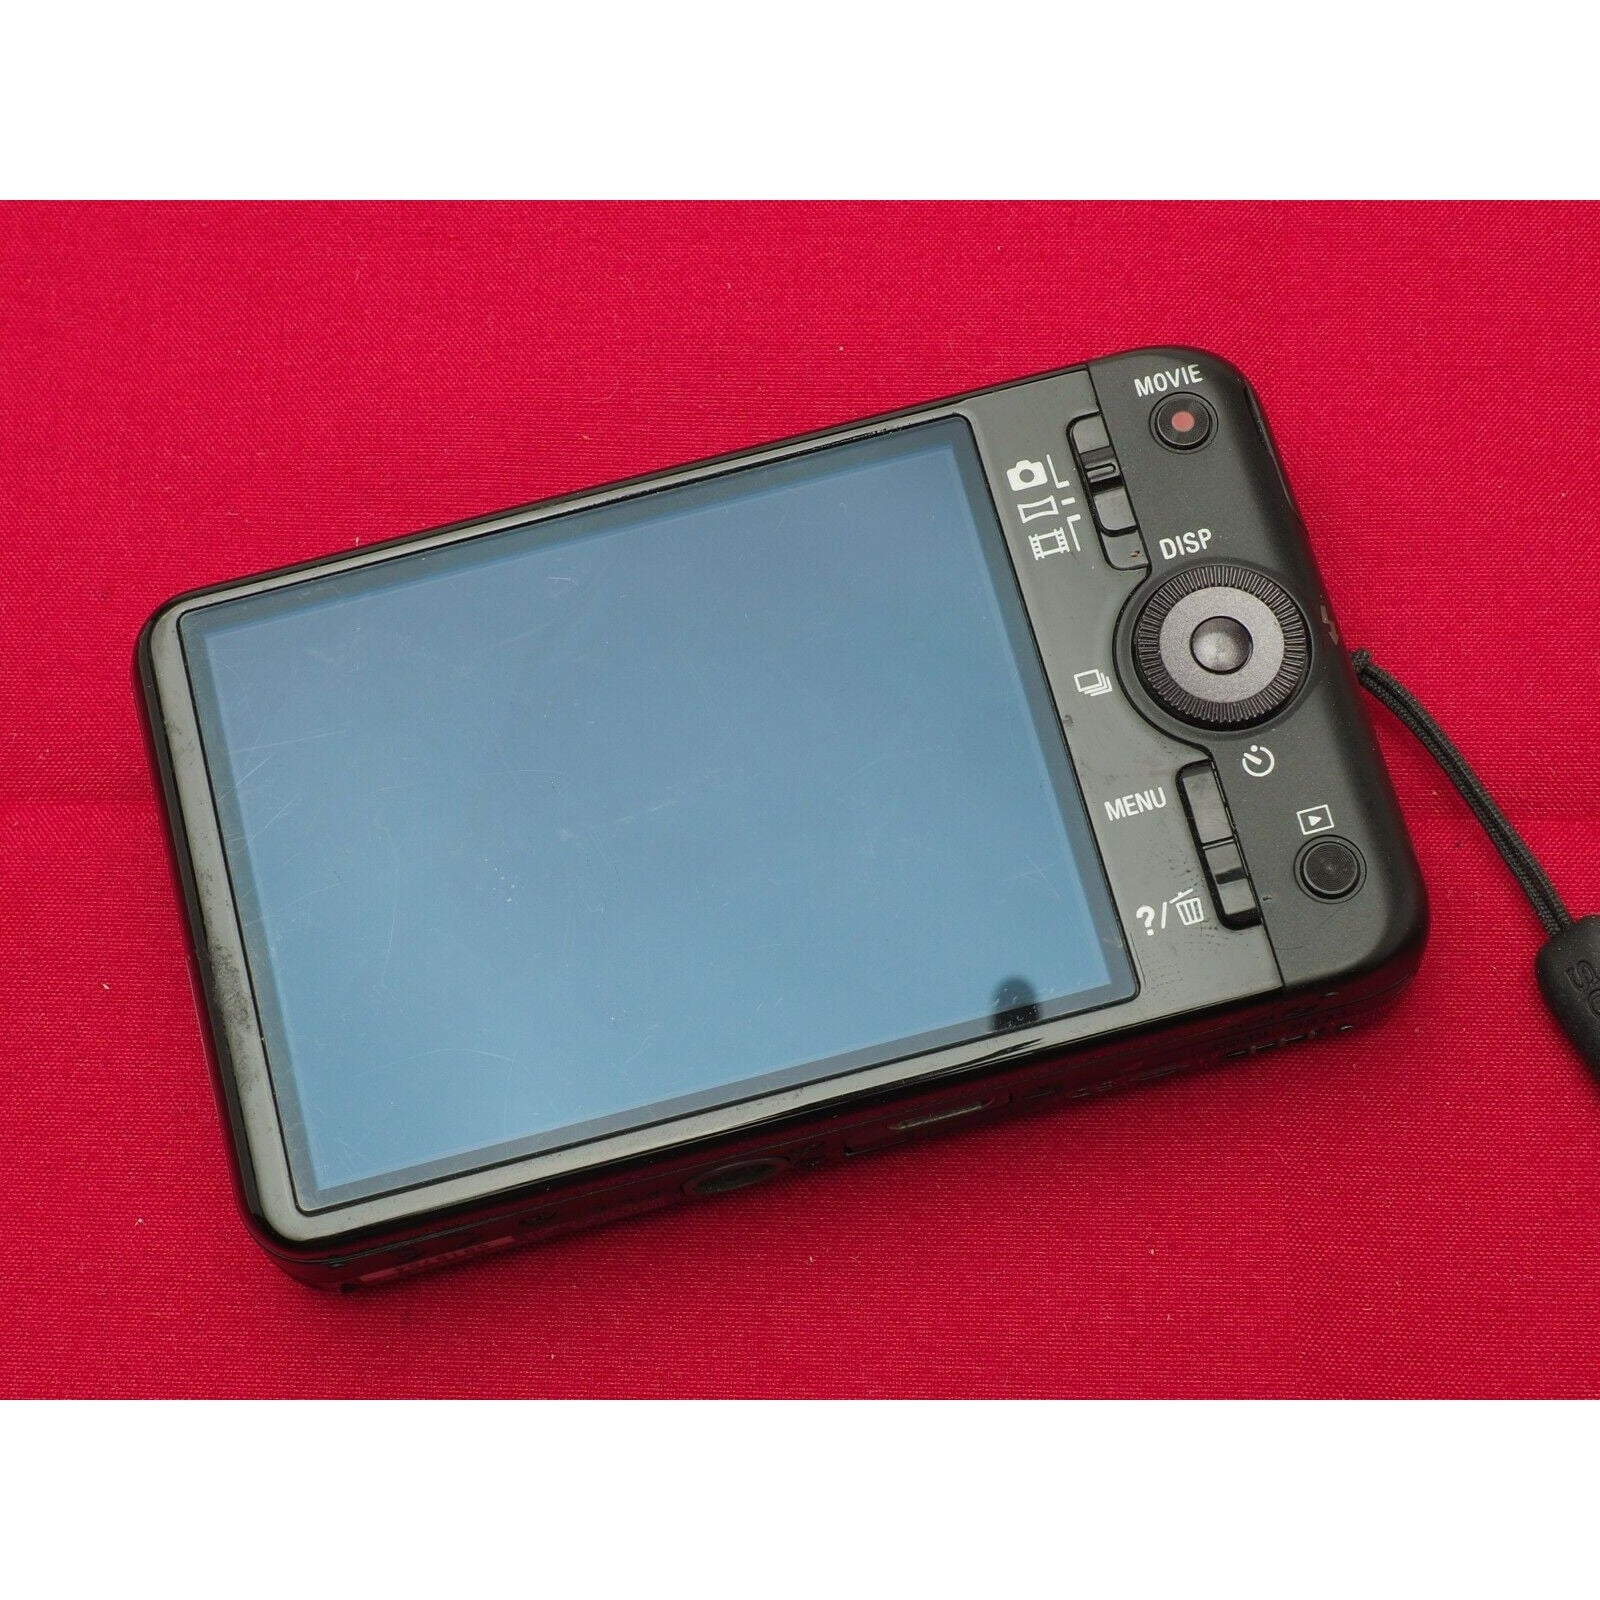 Sony Cyber-shot DSC-WX9 16.2MP Digital Camera full HD